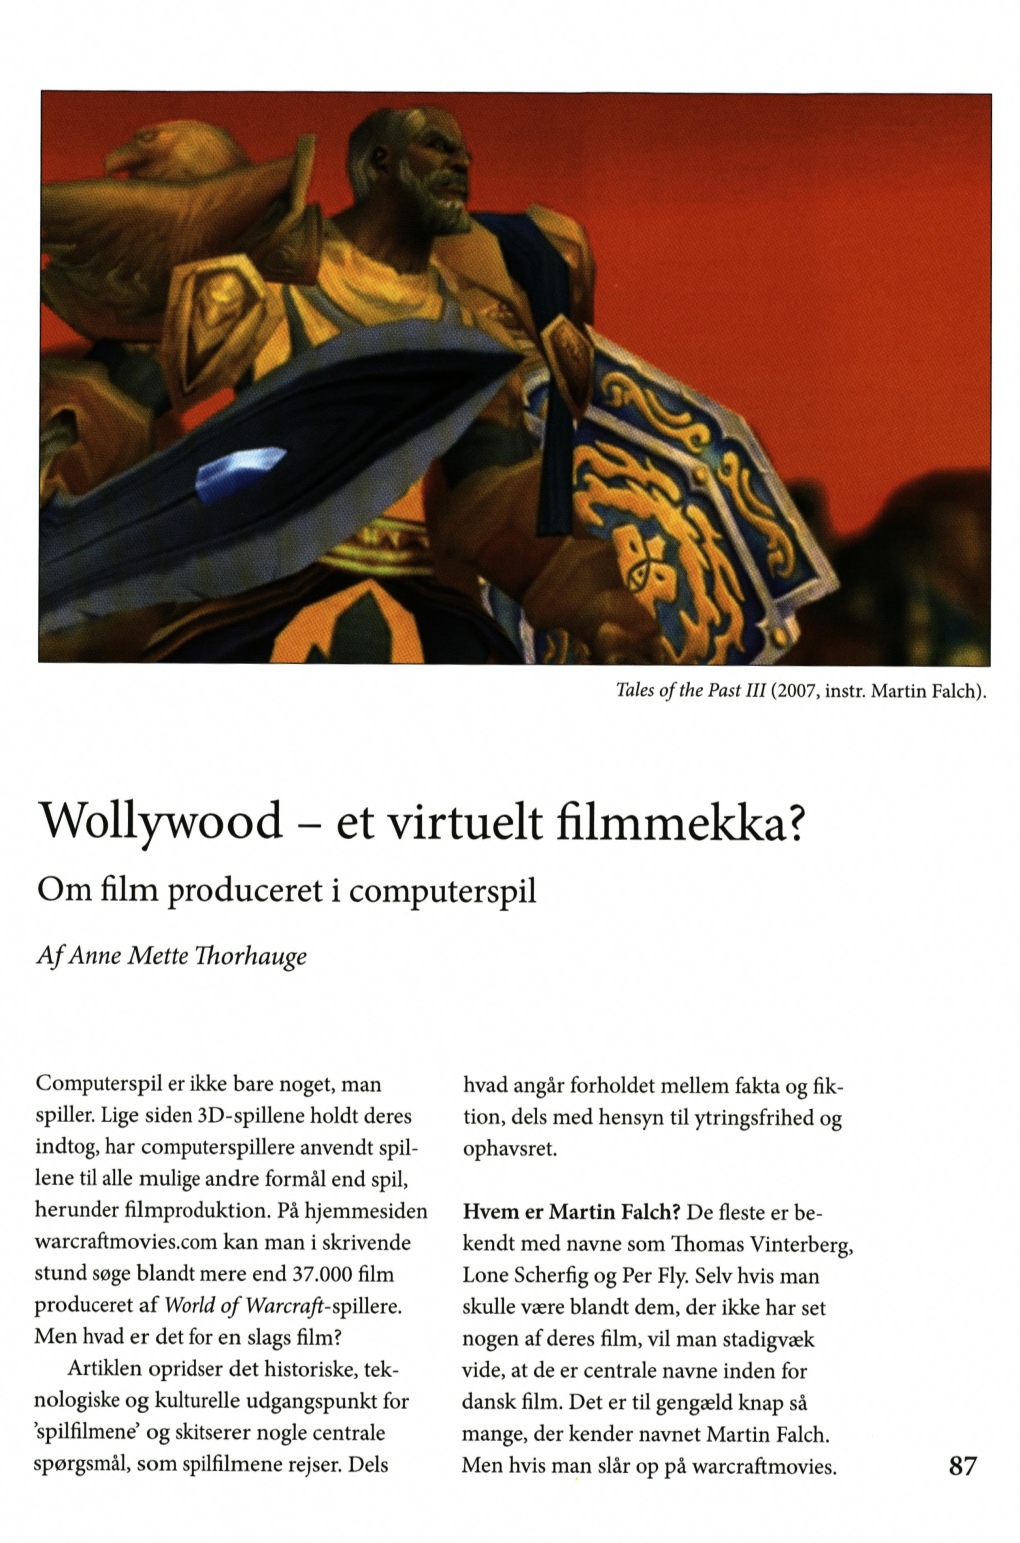 Wollywood - Et Virtuelt Filmmekka? Om Film Produceret I Computerspil